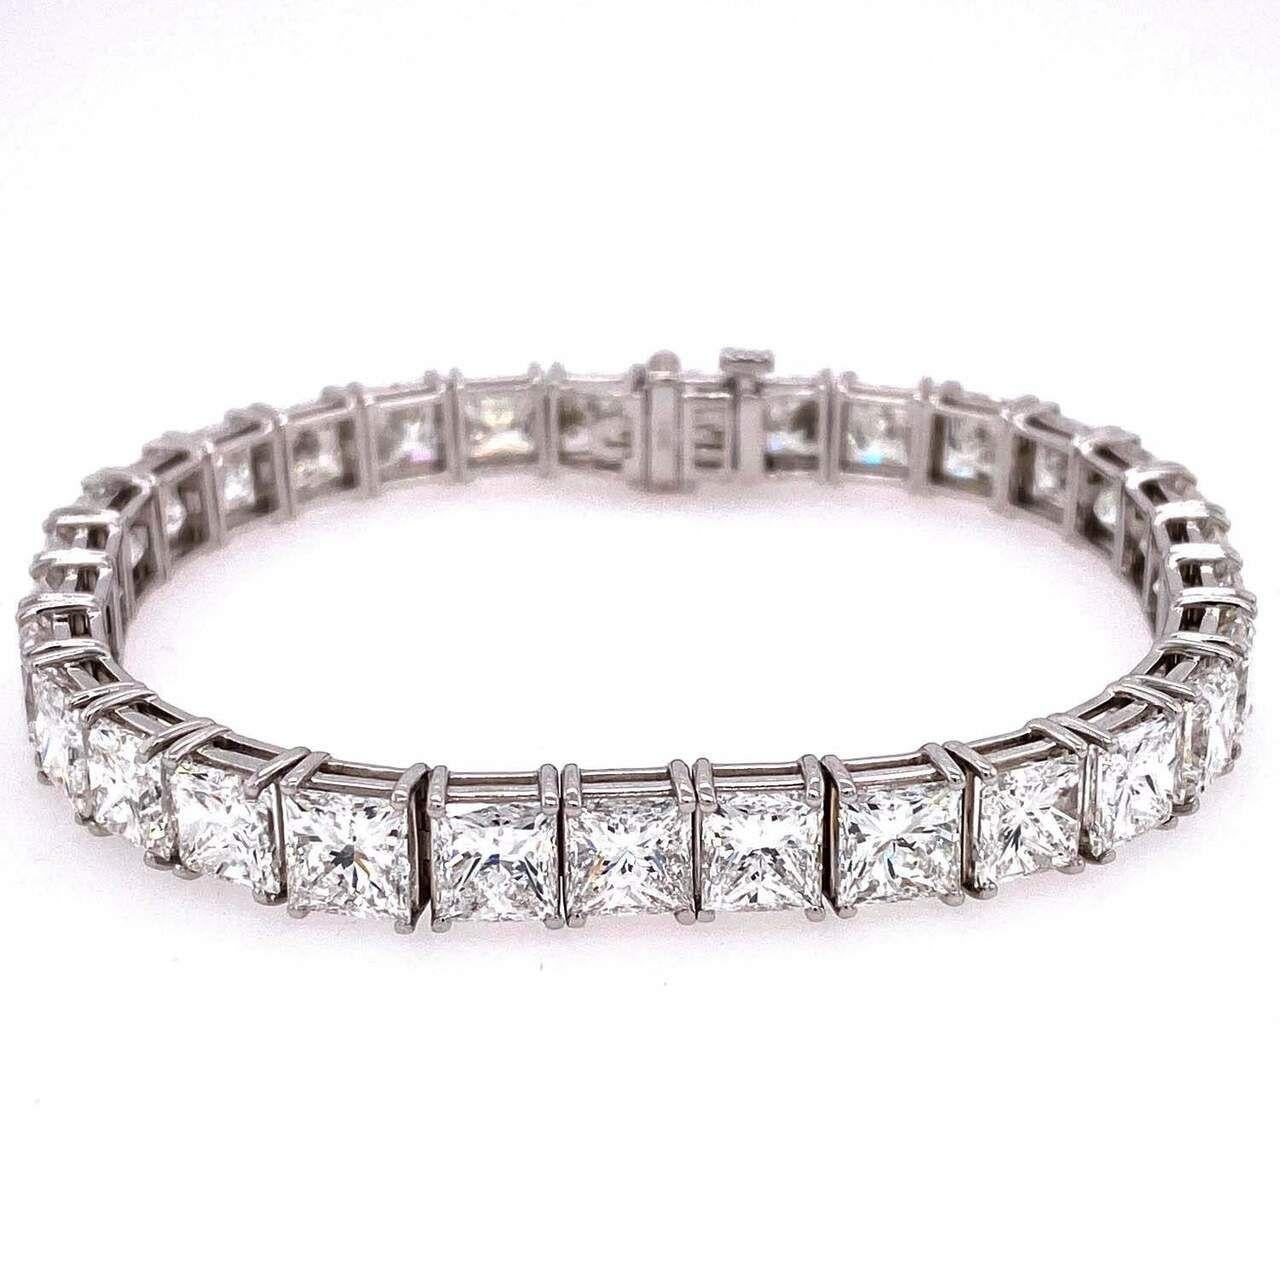 30 carat tennis bracelet